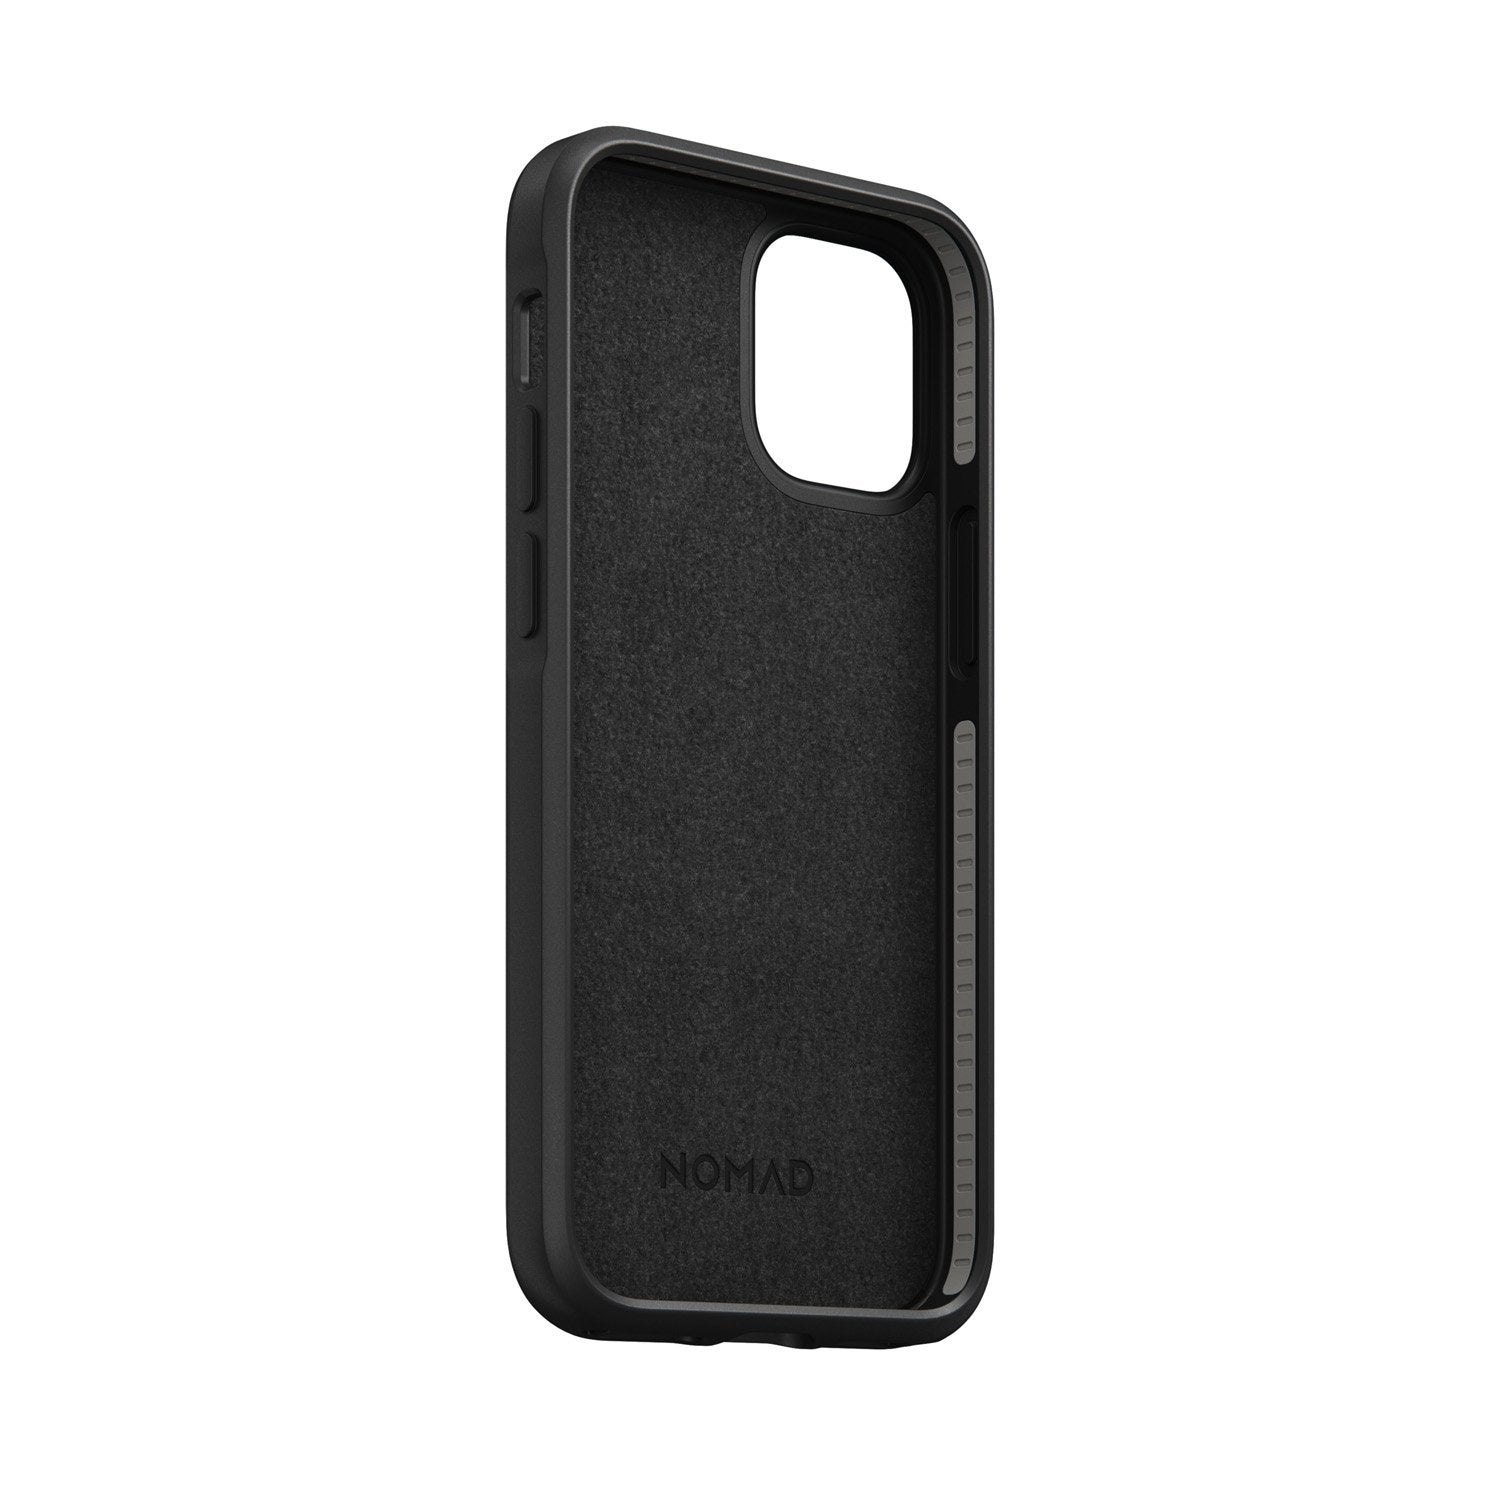 NOMAD Rugged Horween Leather Case for iPhone 12 mini 5.4"(2020), Black Default NOMAD 